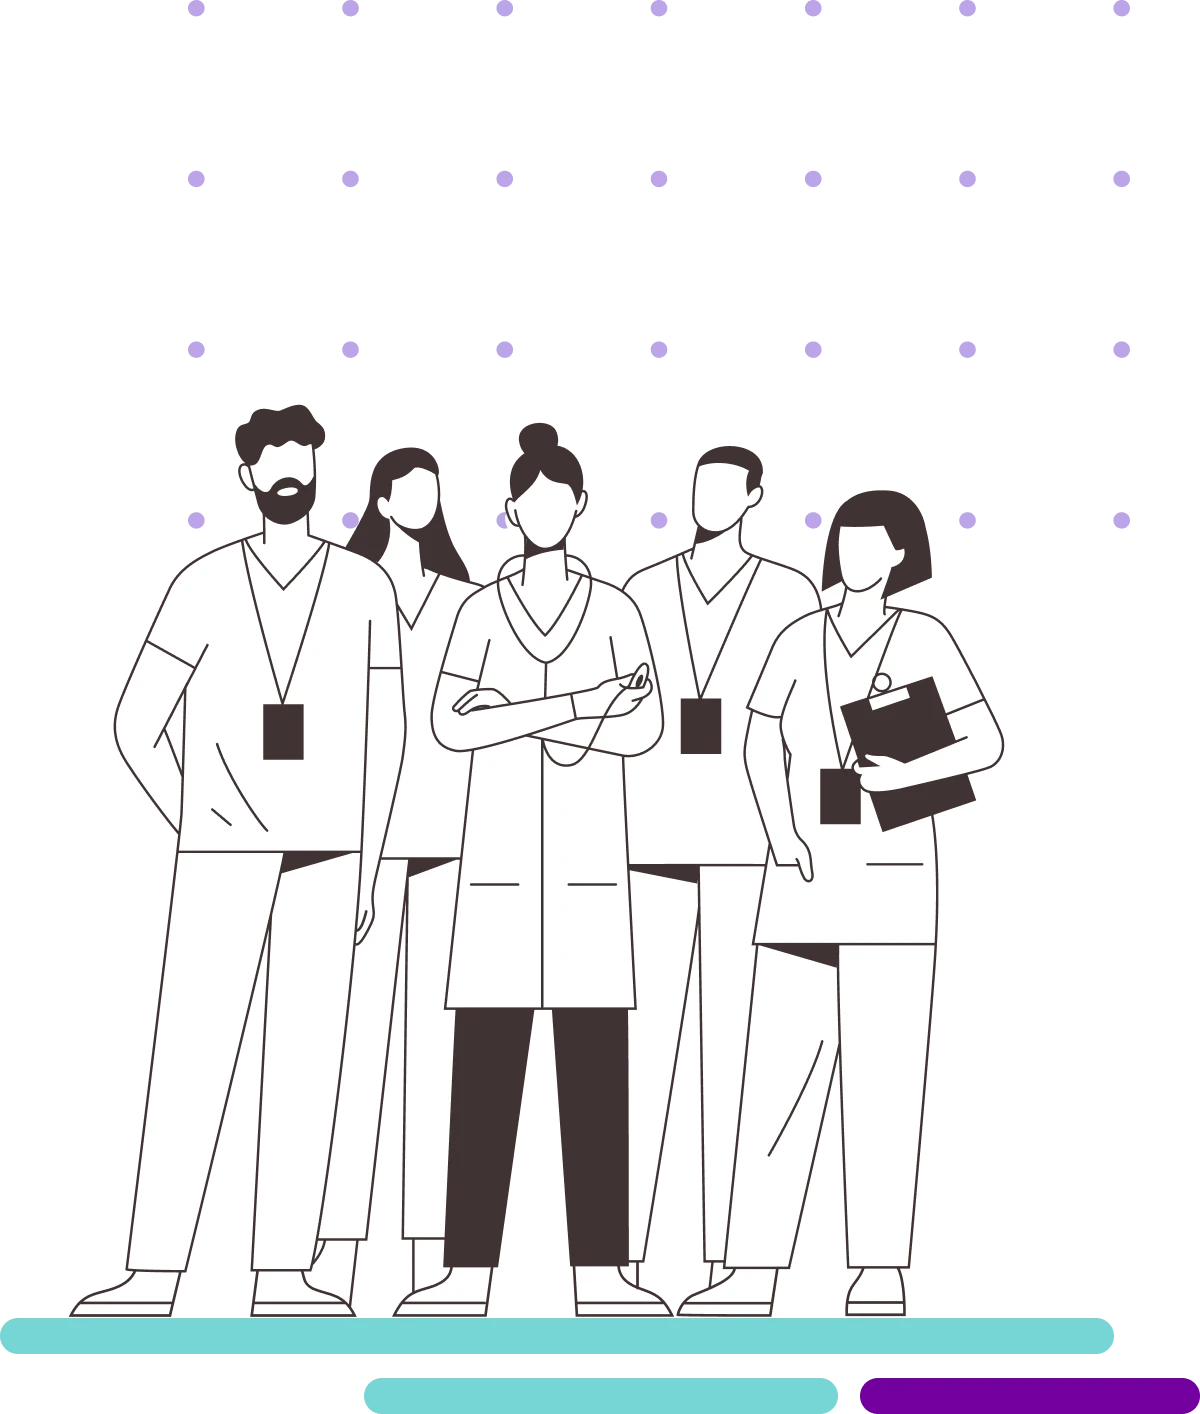 Nurse group illustration